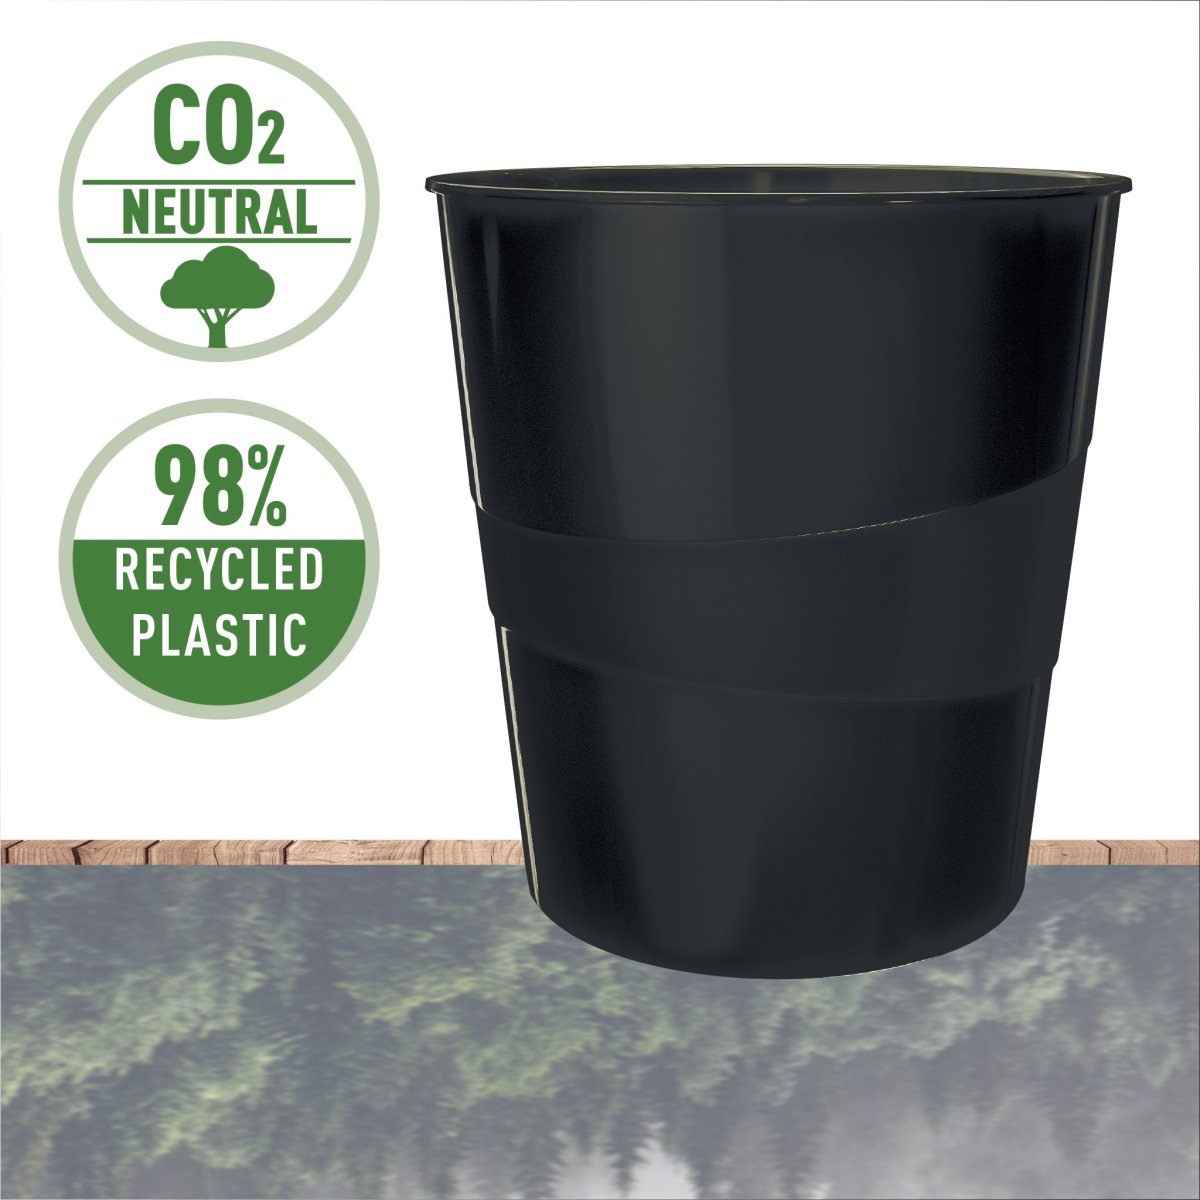 Leitz Recycle papperskorg | 15 liter | Svart